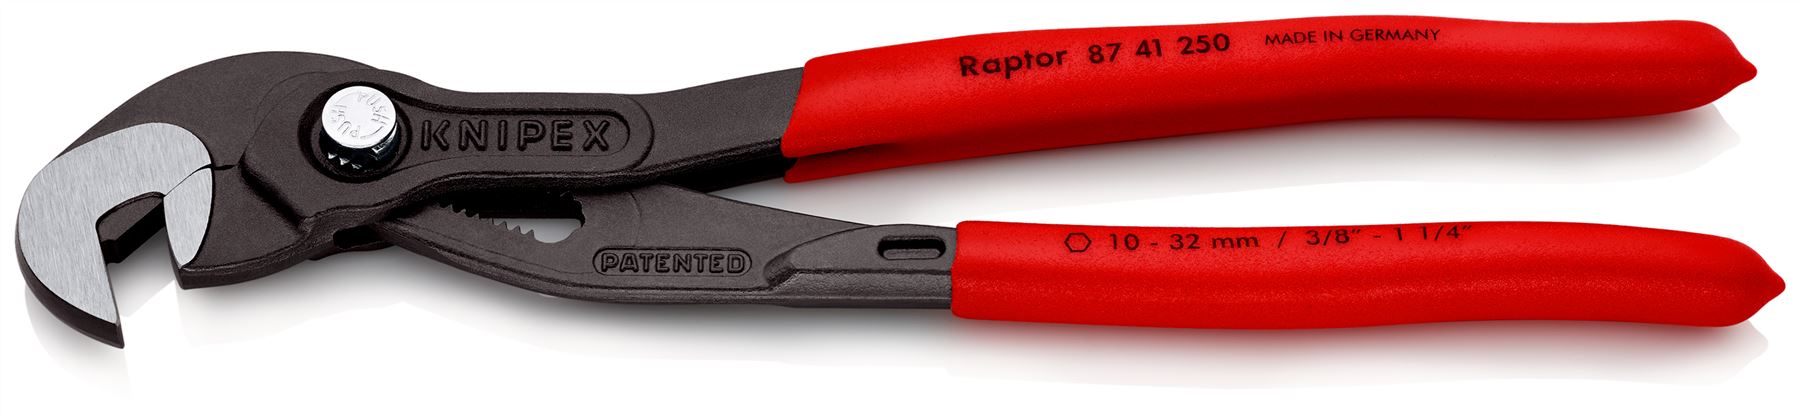 Knipex Multiple Slip Joint Spanner RAPTOR 10-32mm 250mm 87 41 250